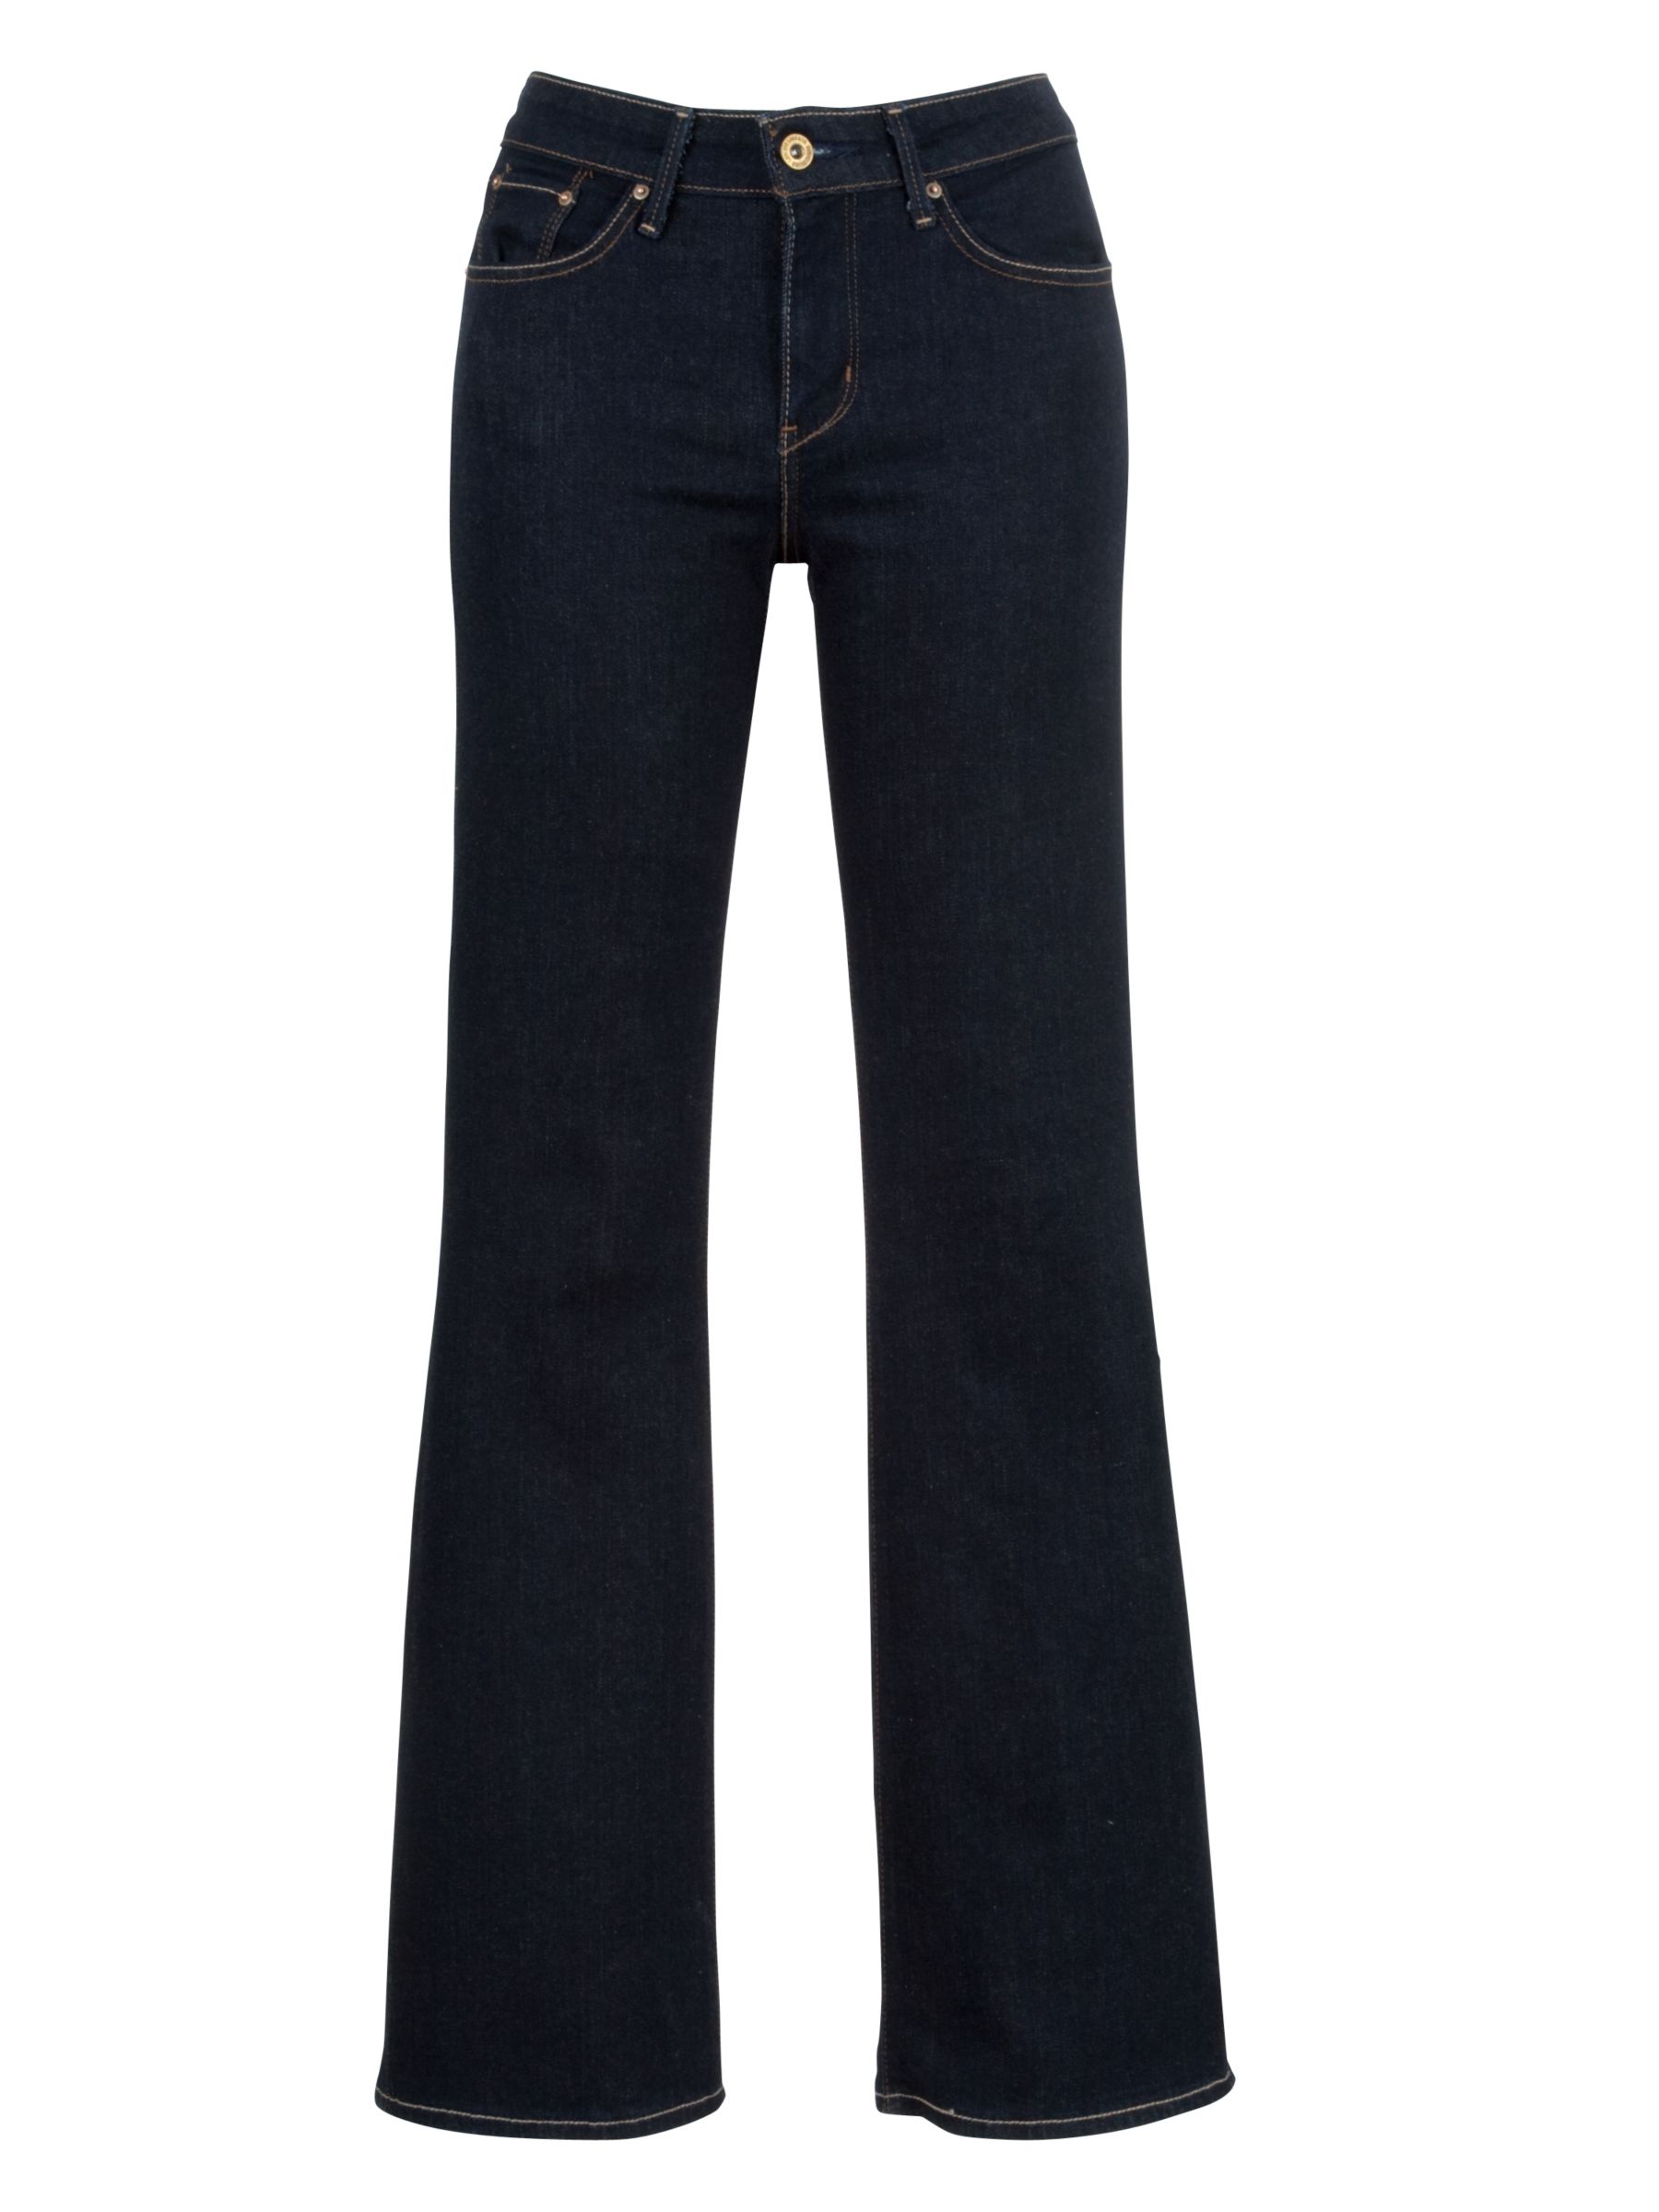 Levi's Curve ID - Demi Curve Bootcut Jeans, Indigo